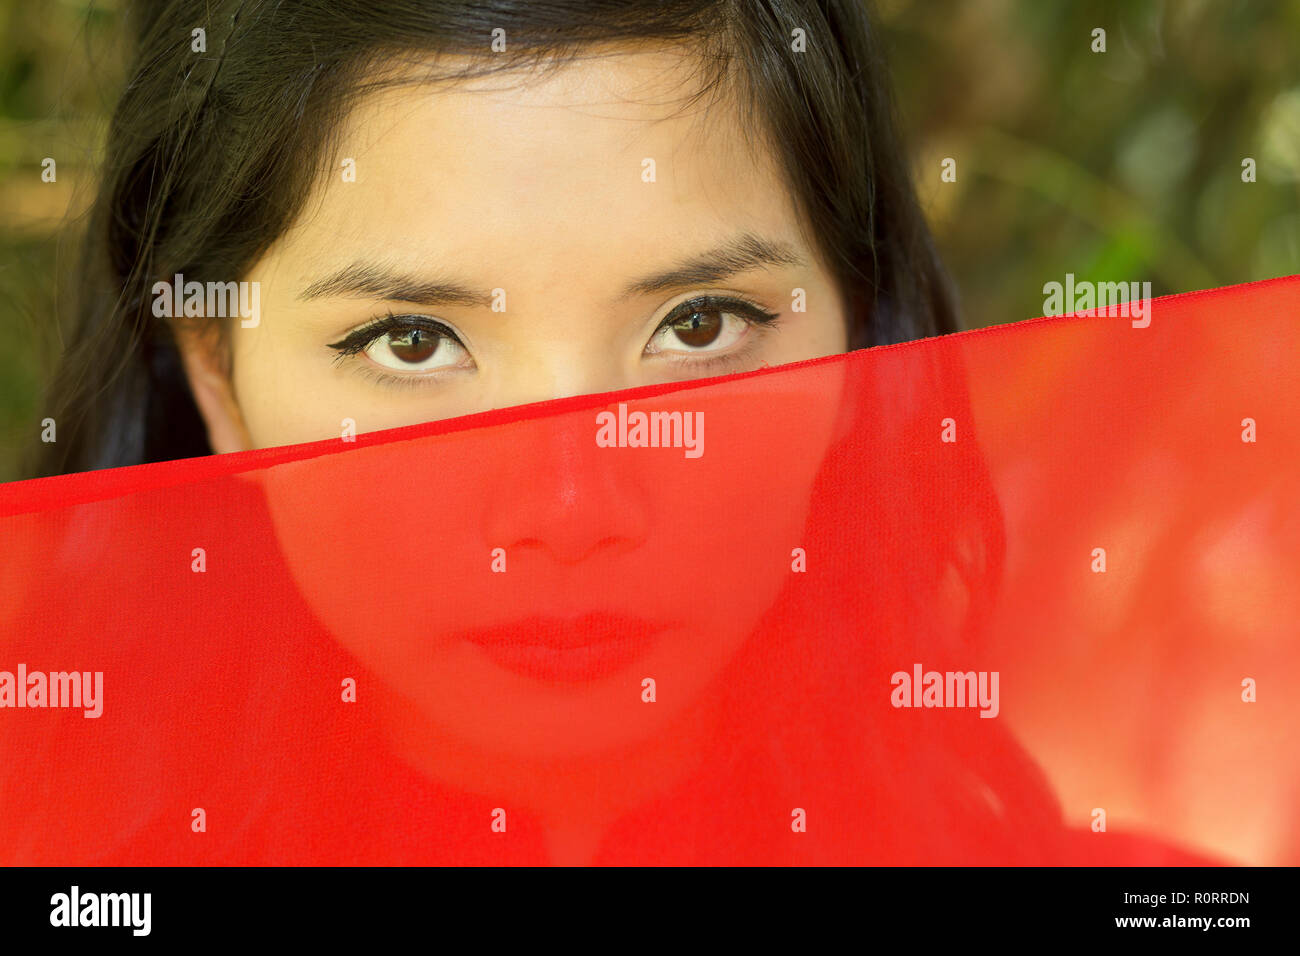 Vietnamese woman peeking over red fabric at the camera Stock Photo